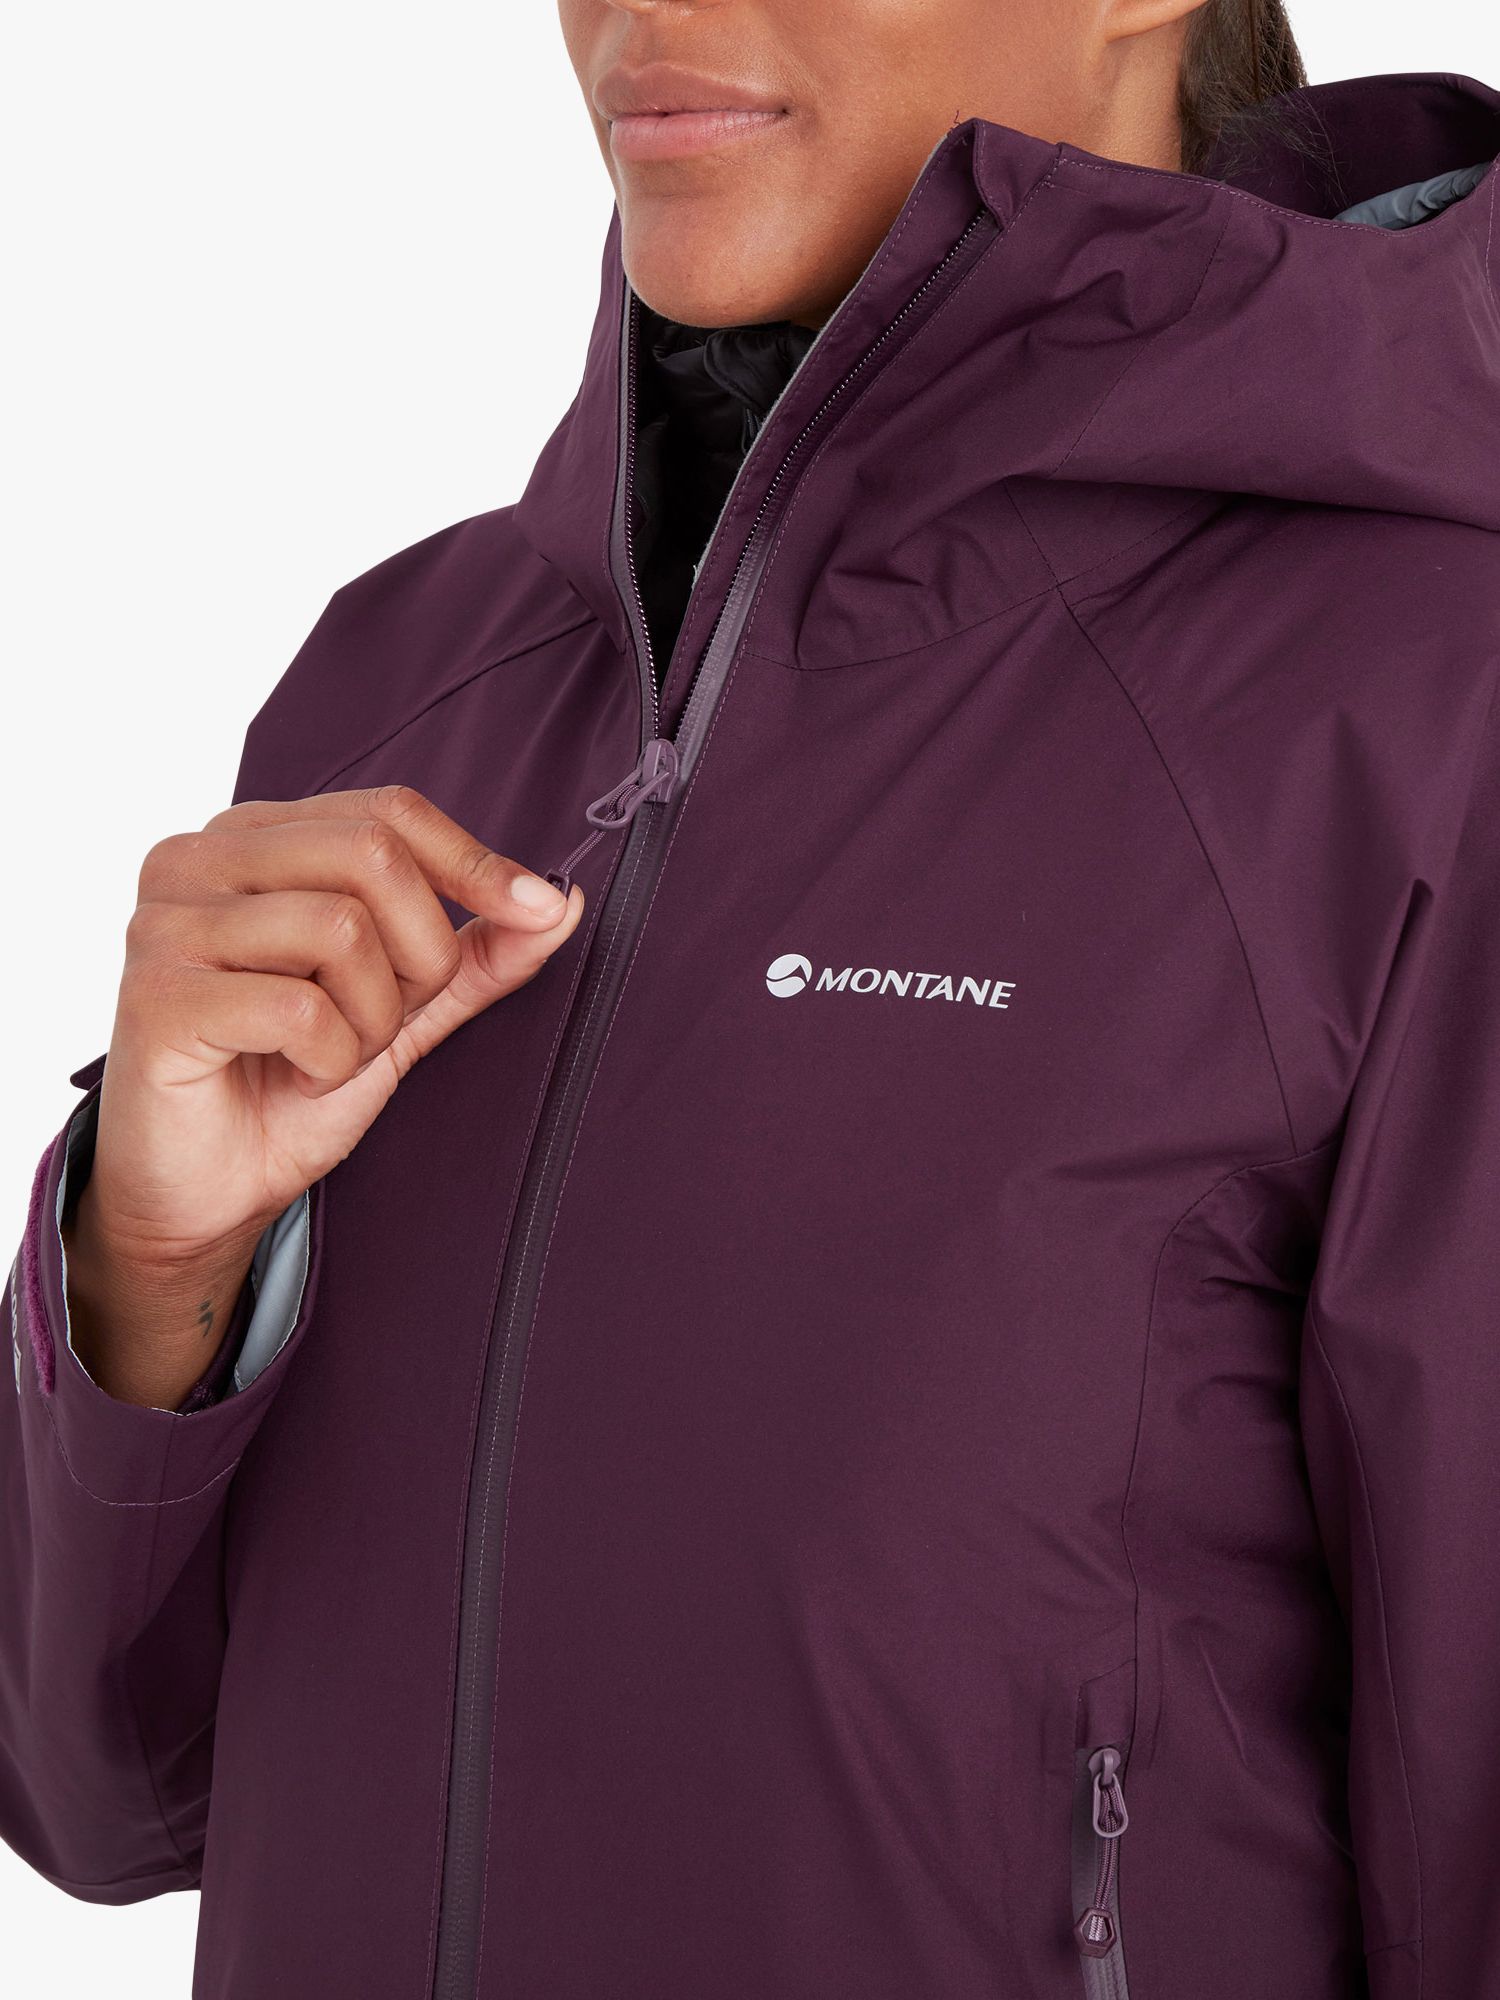 Montane Spirit Women's Gore-Tex Waterproof Jacket, Saskatoon Berry